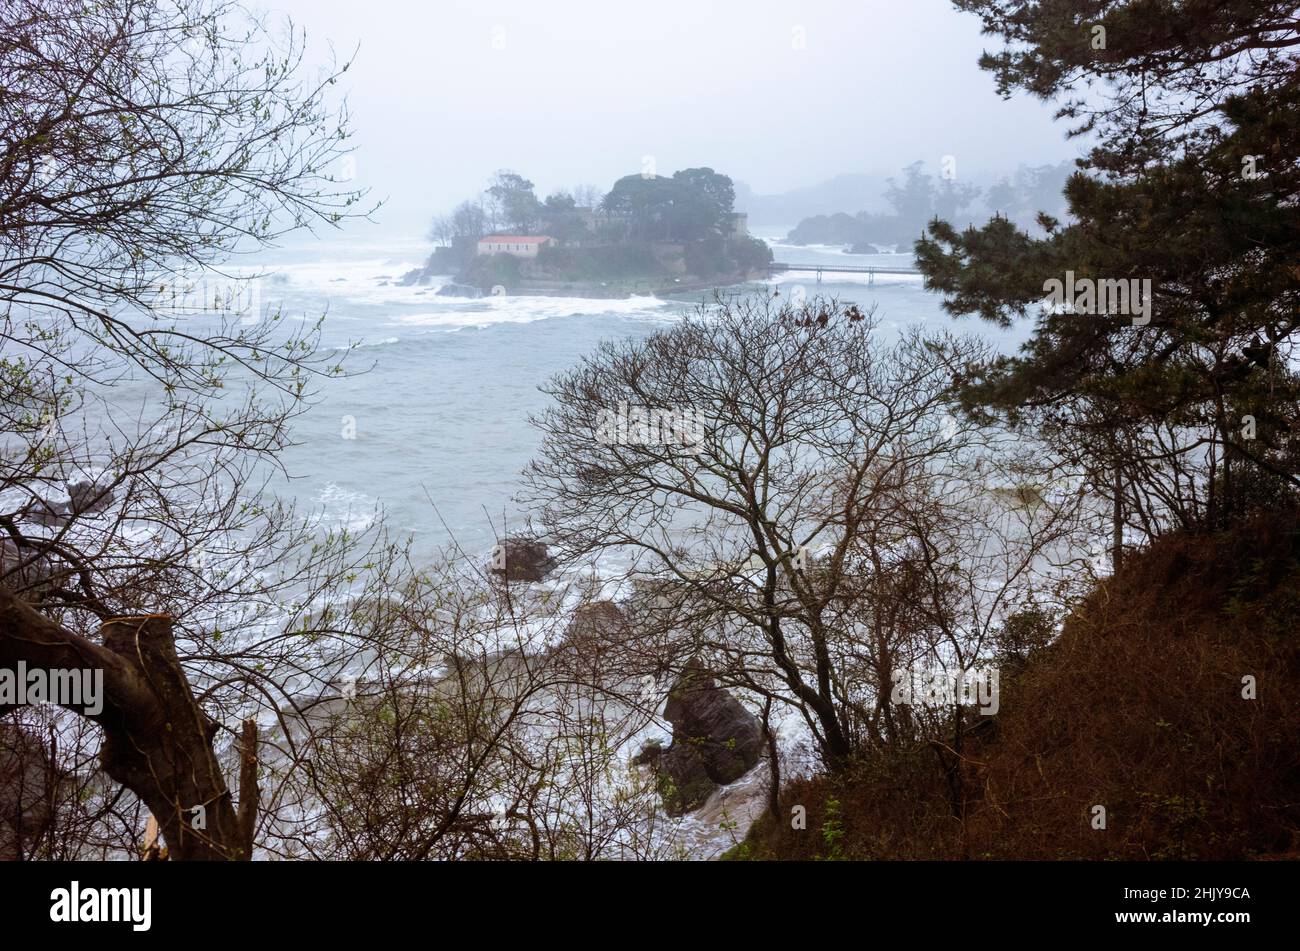 Oleiros, A Coruña province, Galicia, Spain - February 11th, 2020 : Santa Cruz castle on Santa Cristina islet on a foggy winter evening. Stock Photo